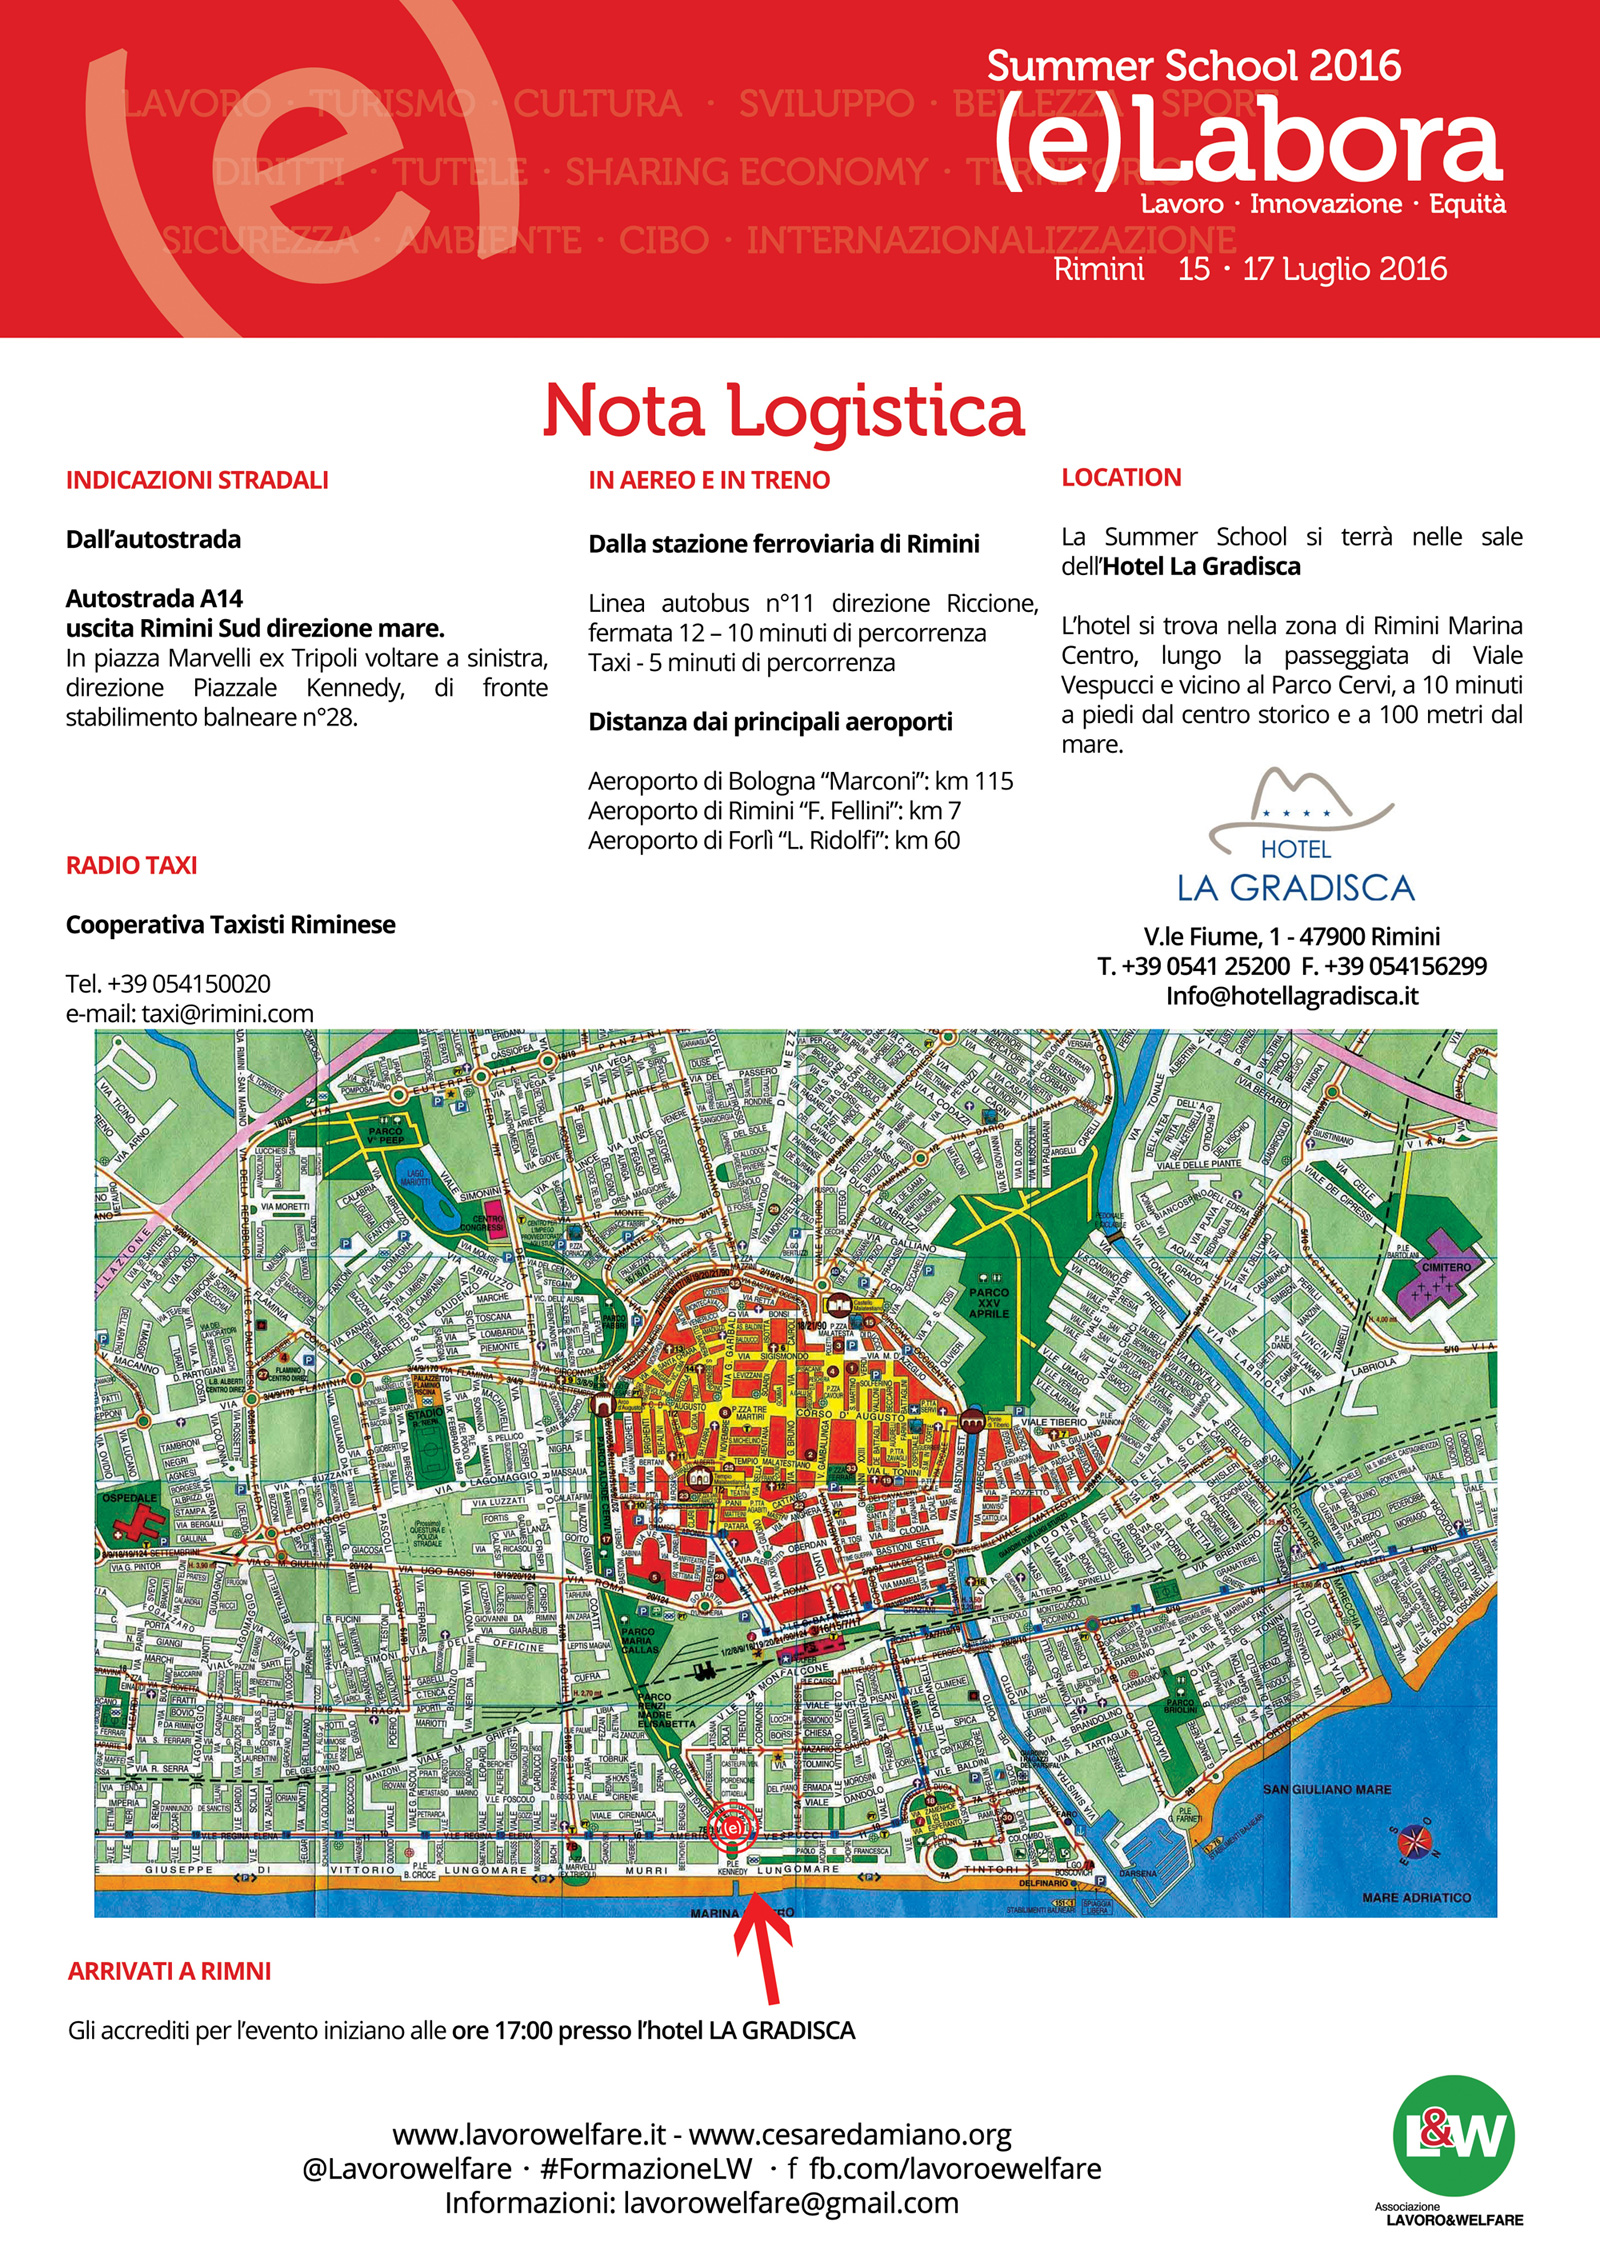 NotaLogisticaElabora2016-Mail